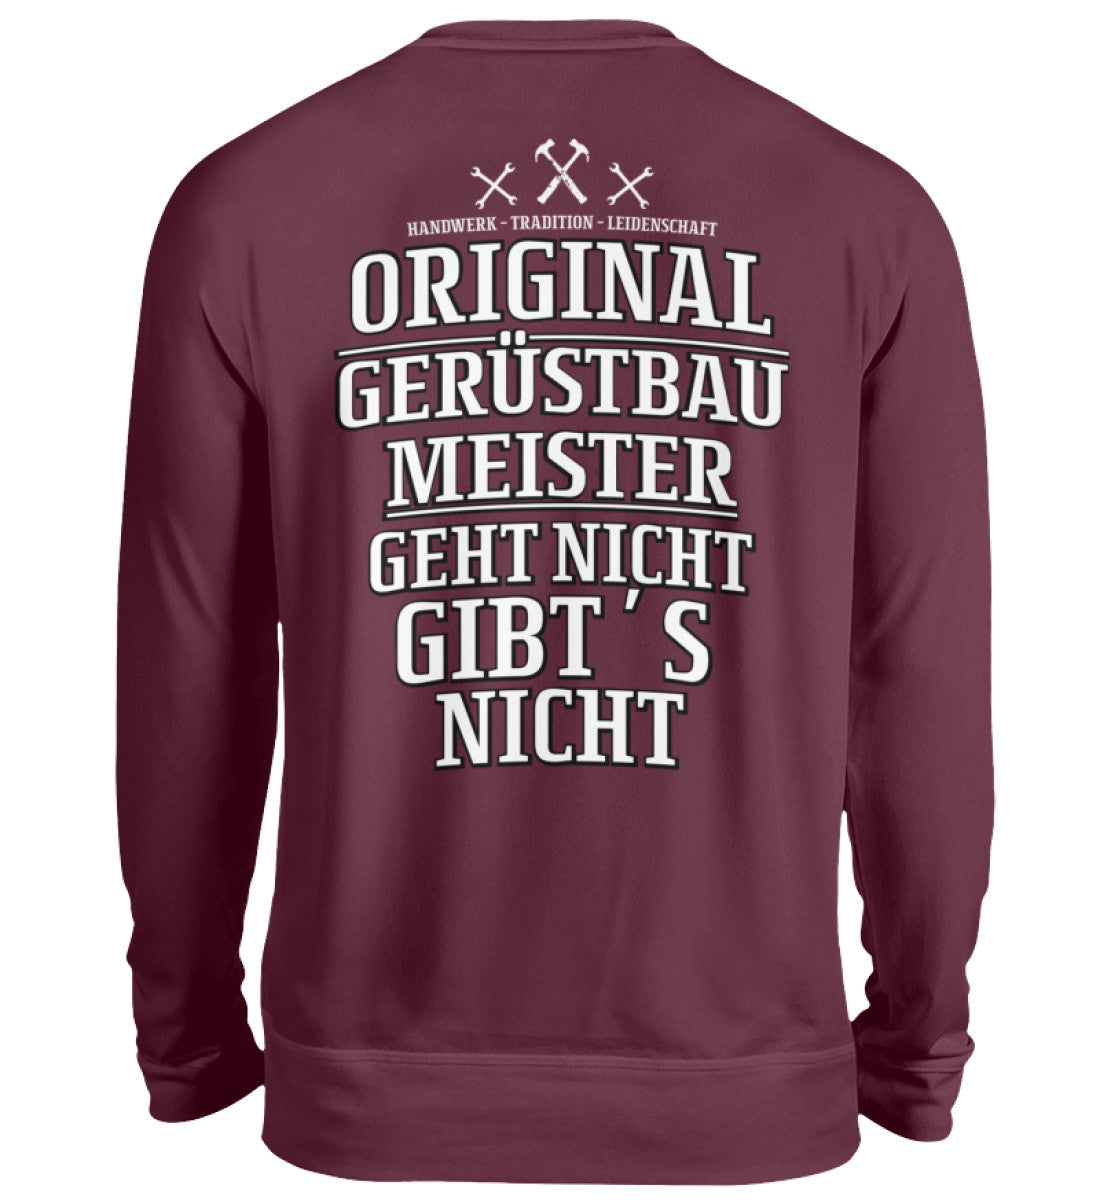 Gerüstbau Meister €32.95 Gerüstbauer - Shop >>